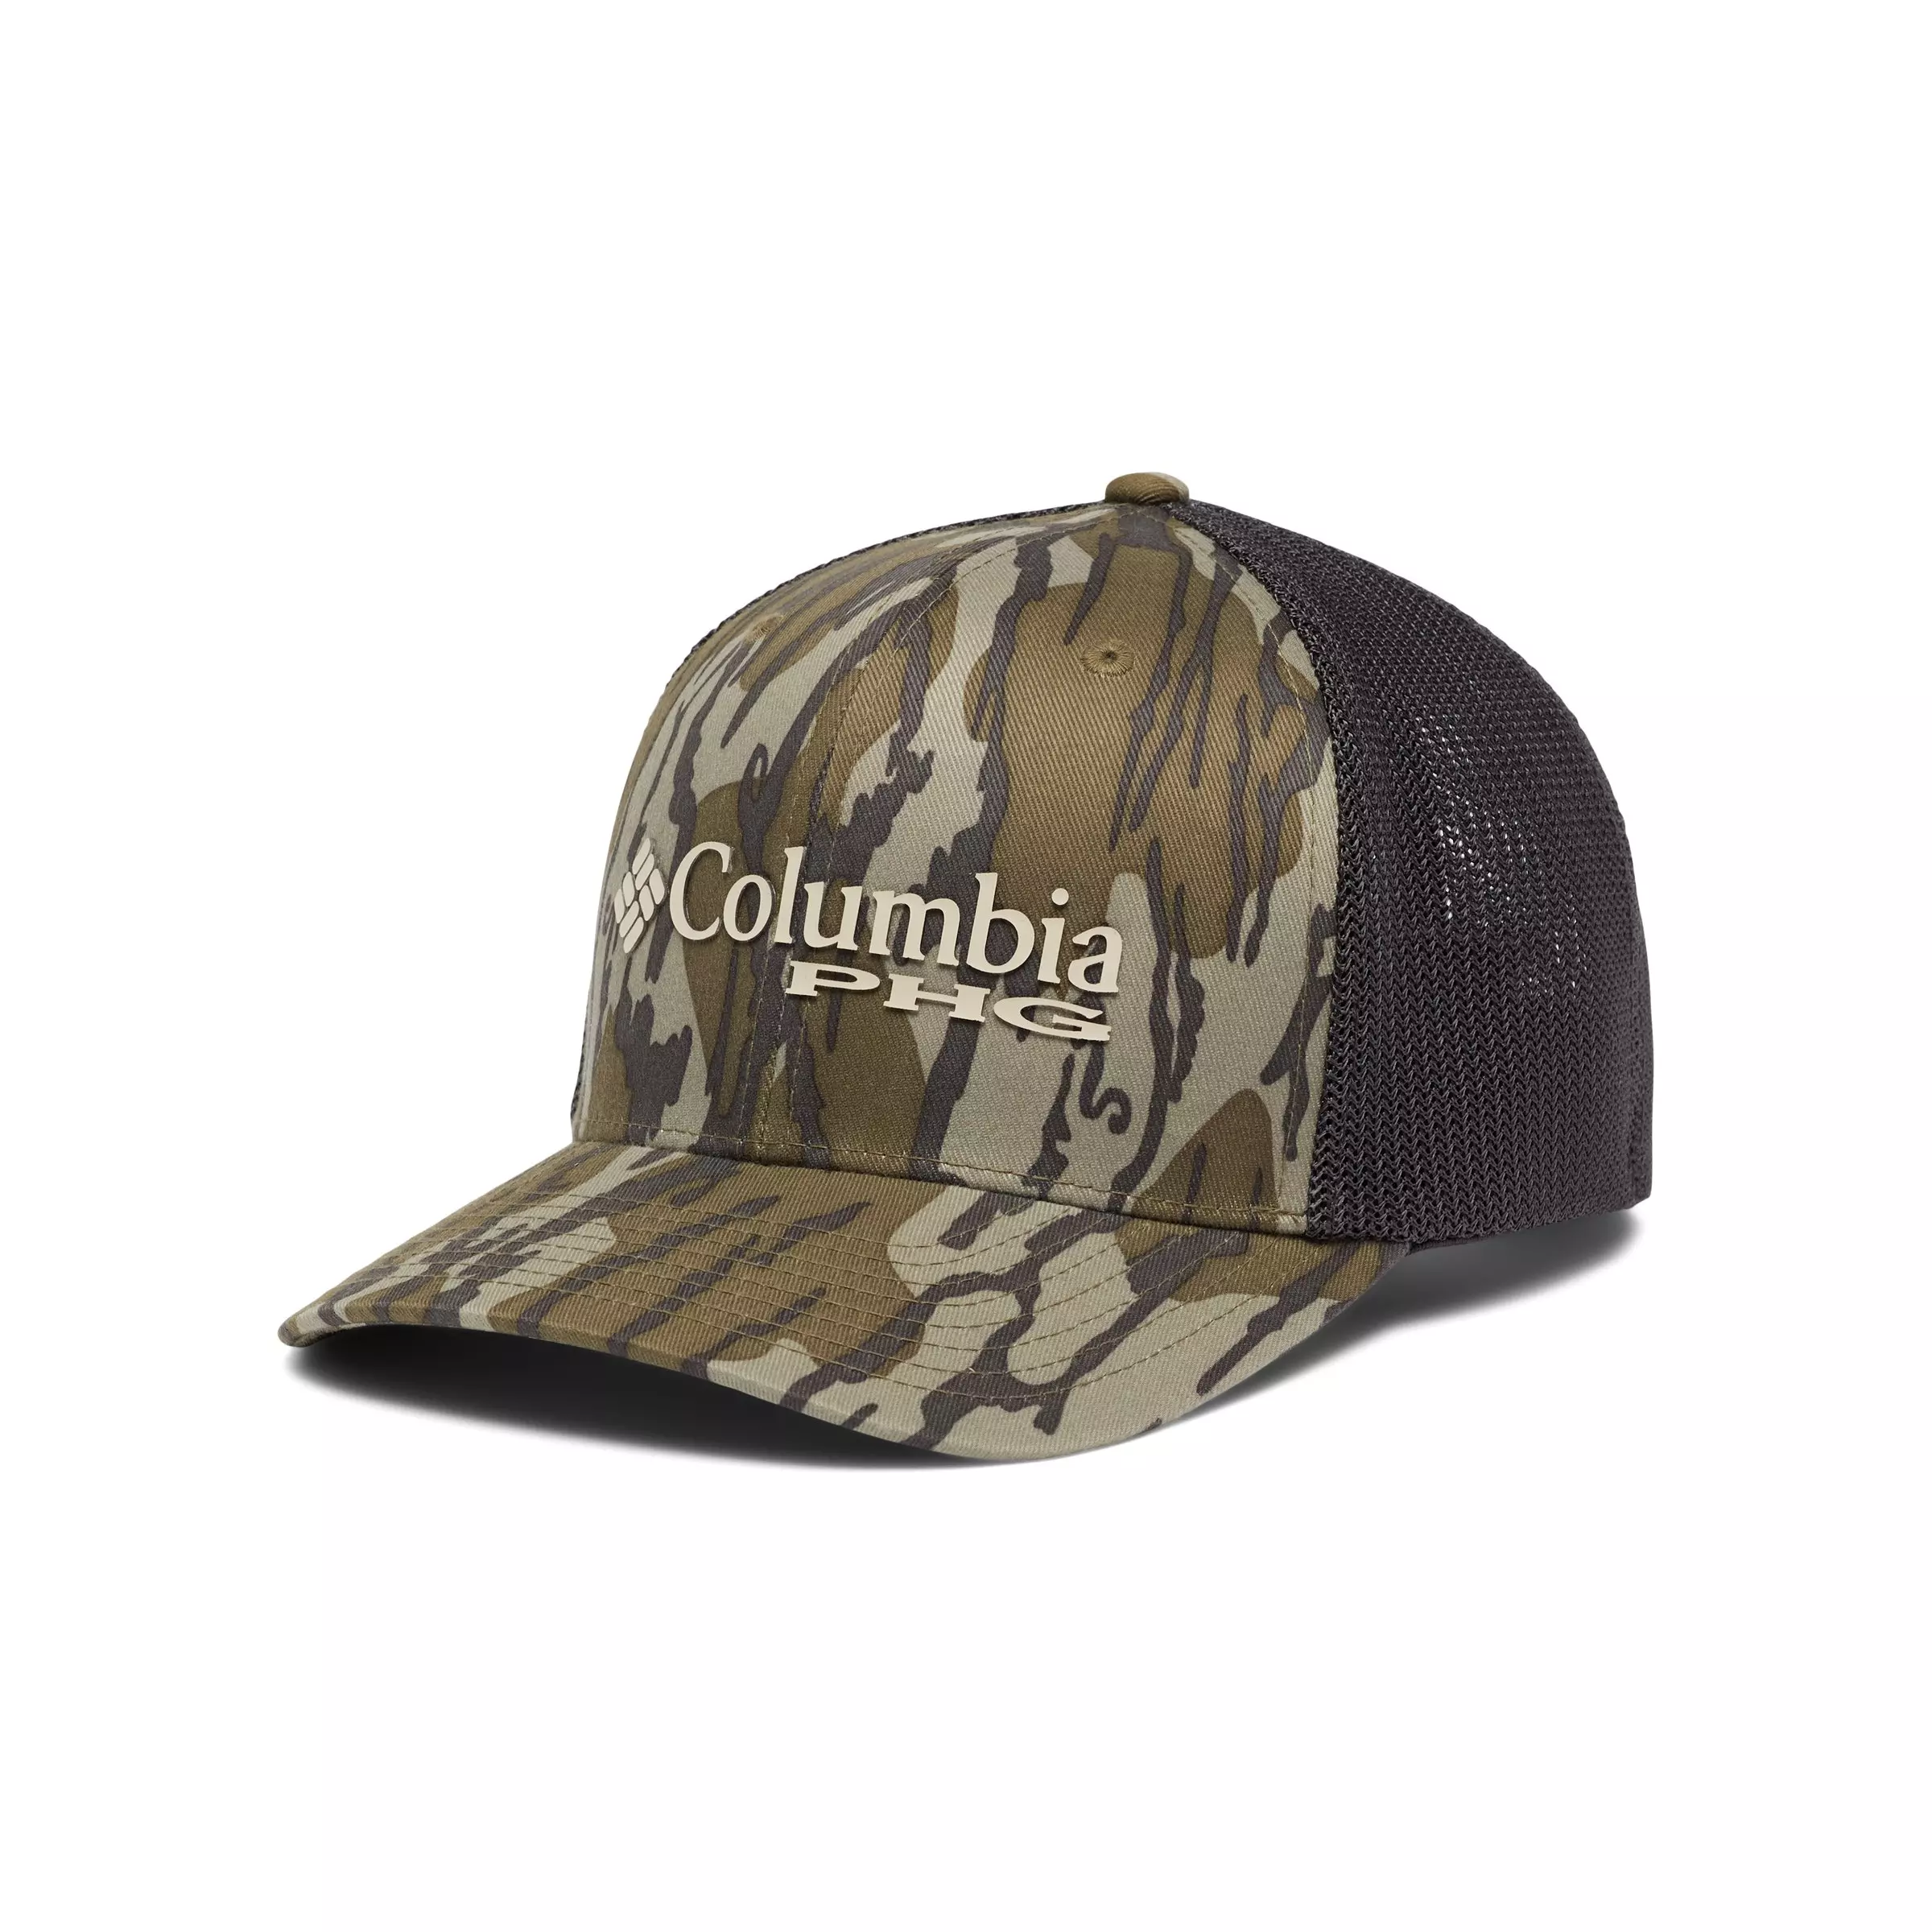 Columbia PHG Mesh Flexfit Ball Cap - Camo, Camouflage, Size: S/M